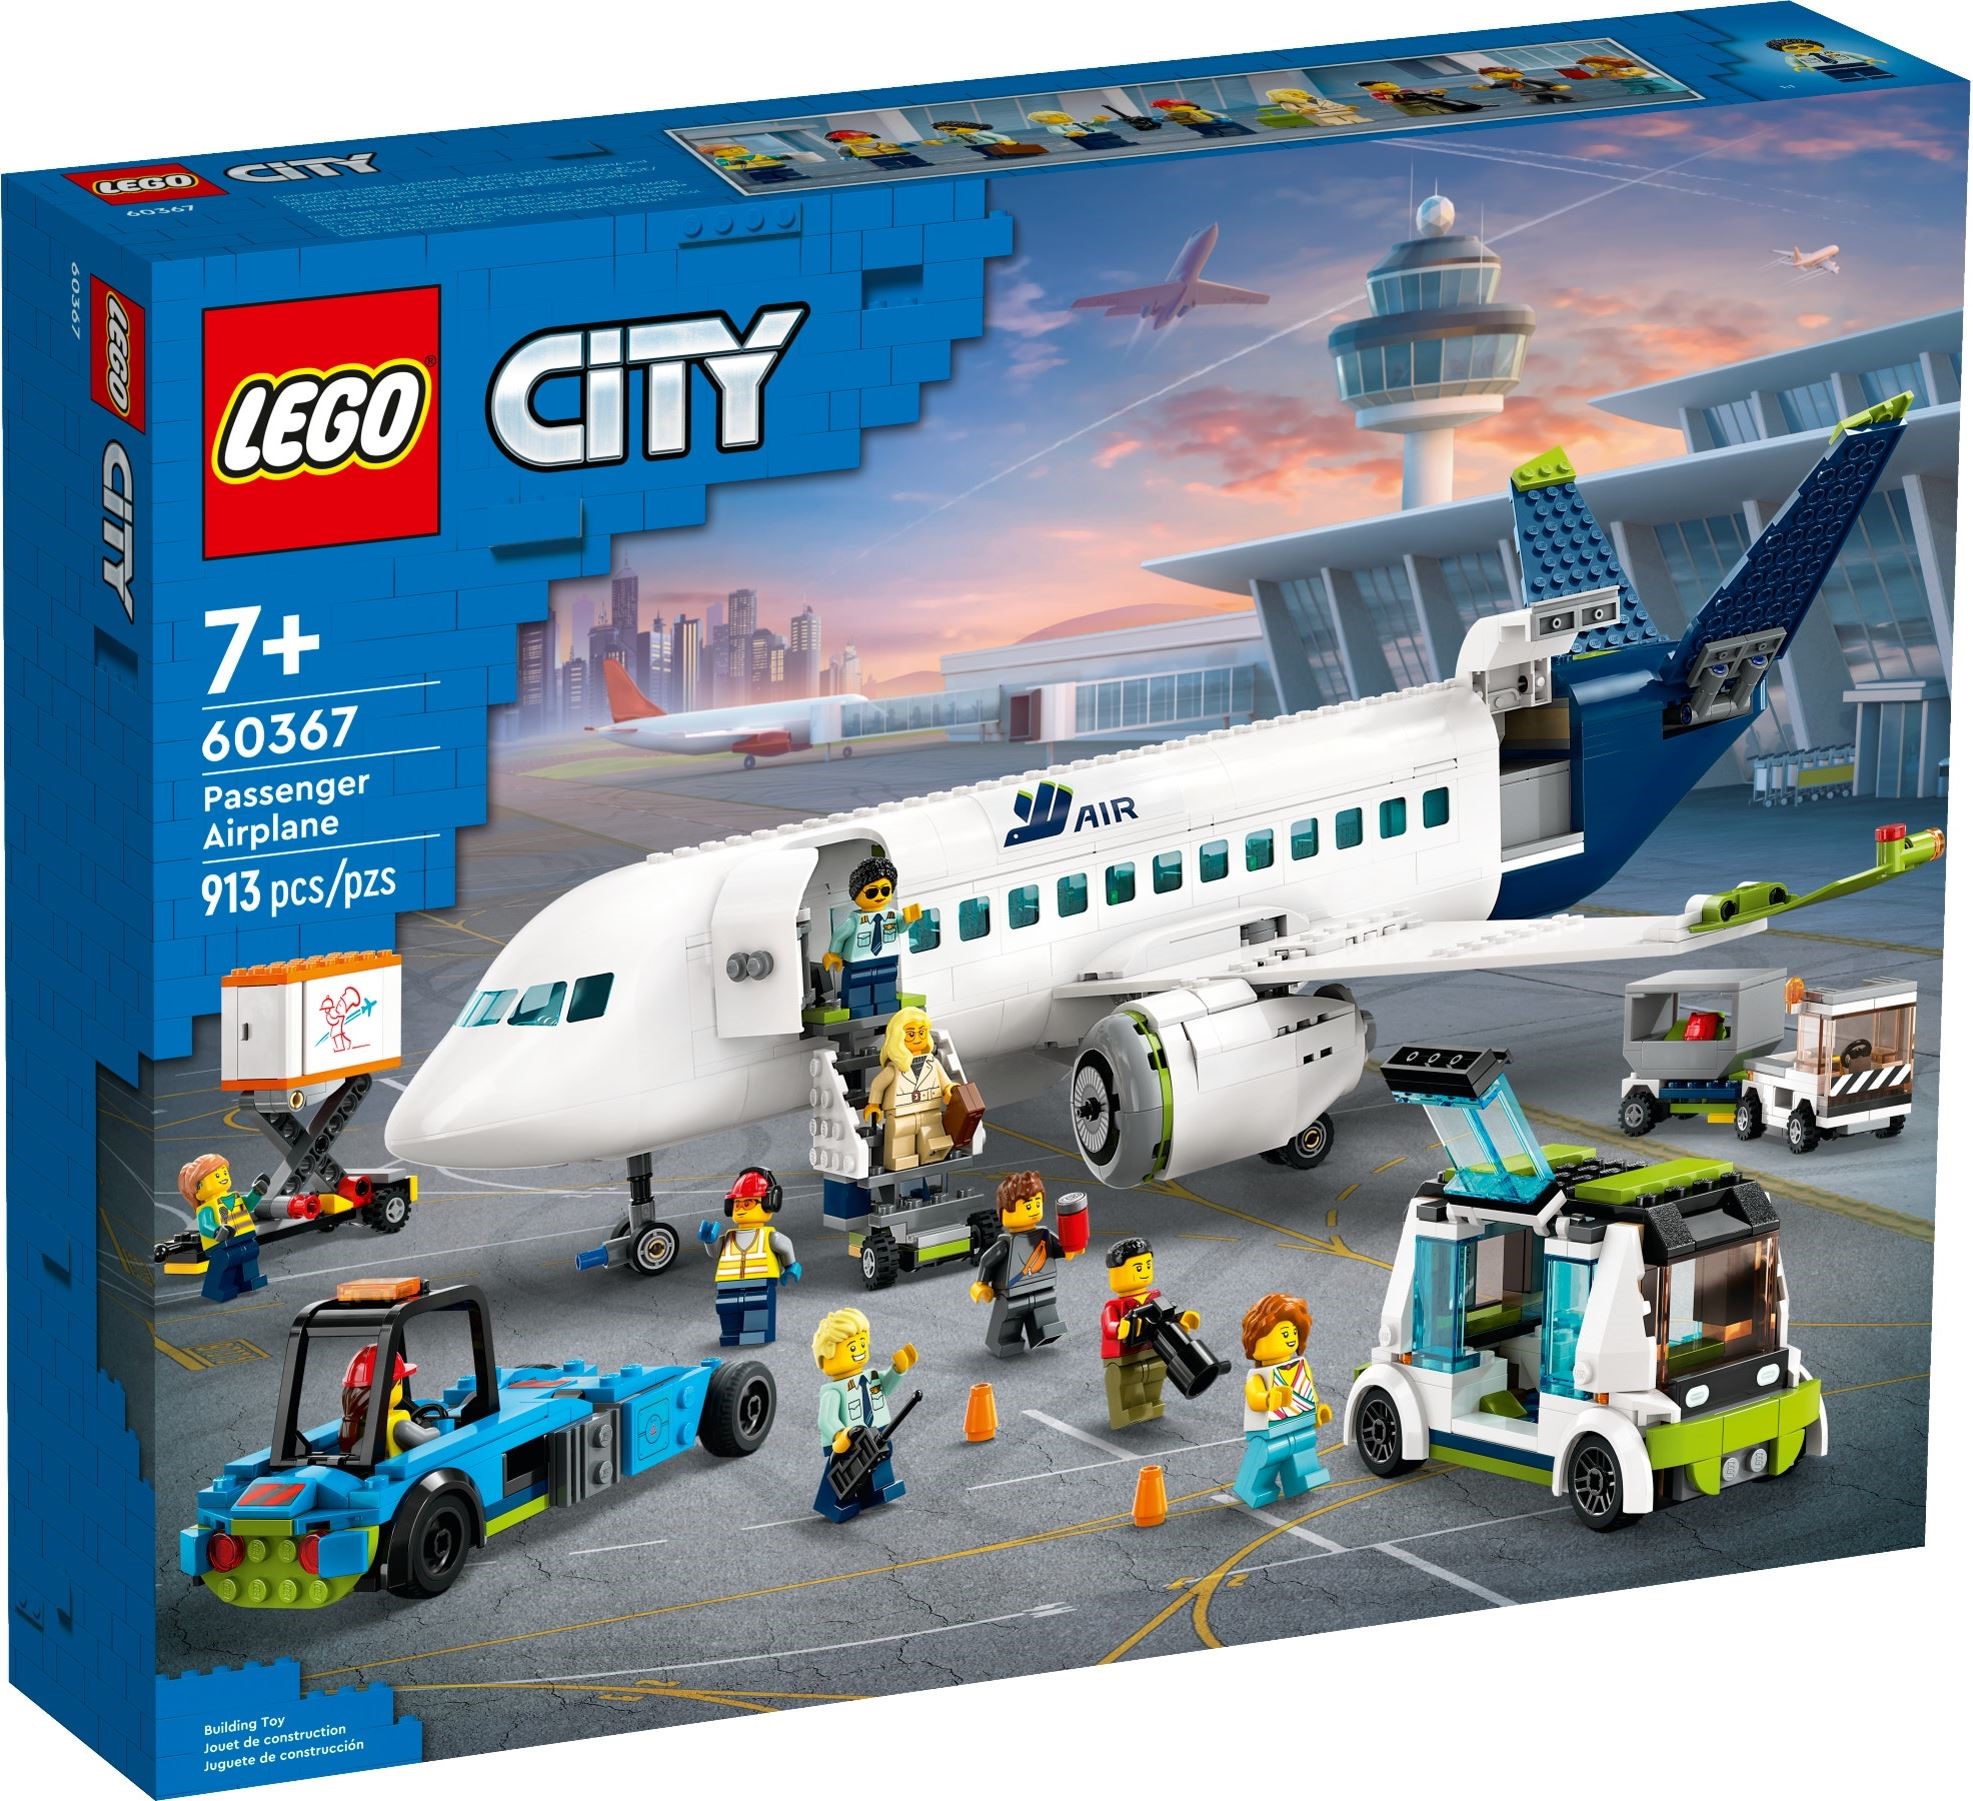 Passenger Airplane 6-8 წელი - LEGO Toys - ლეგოს სათამაშოები